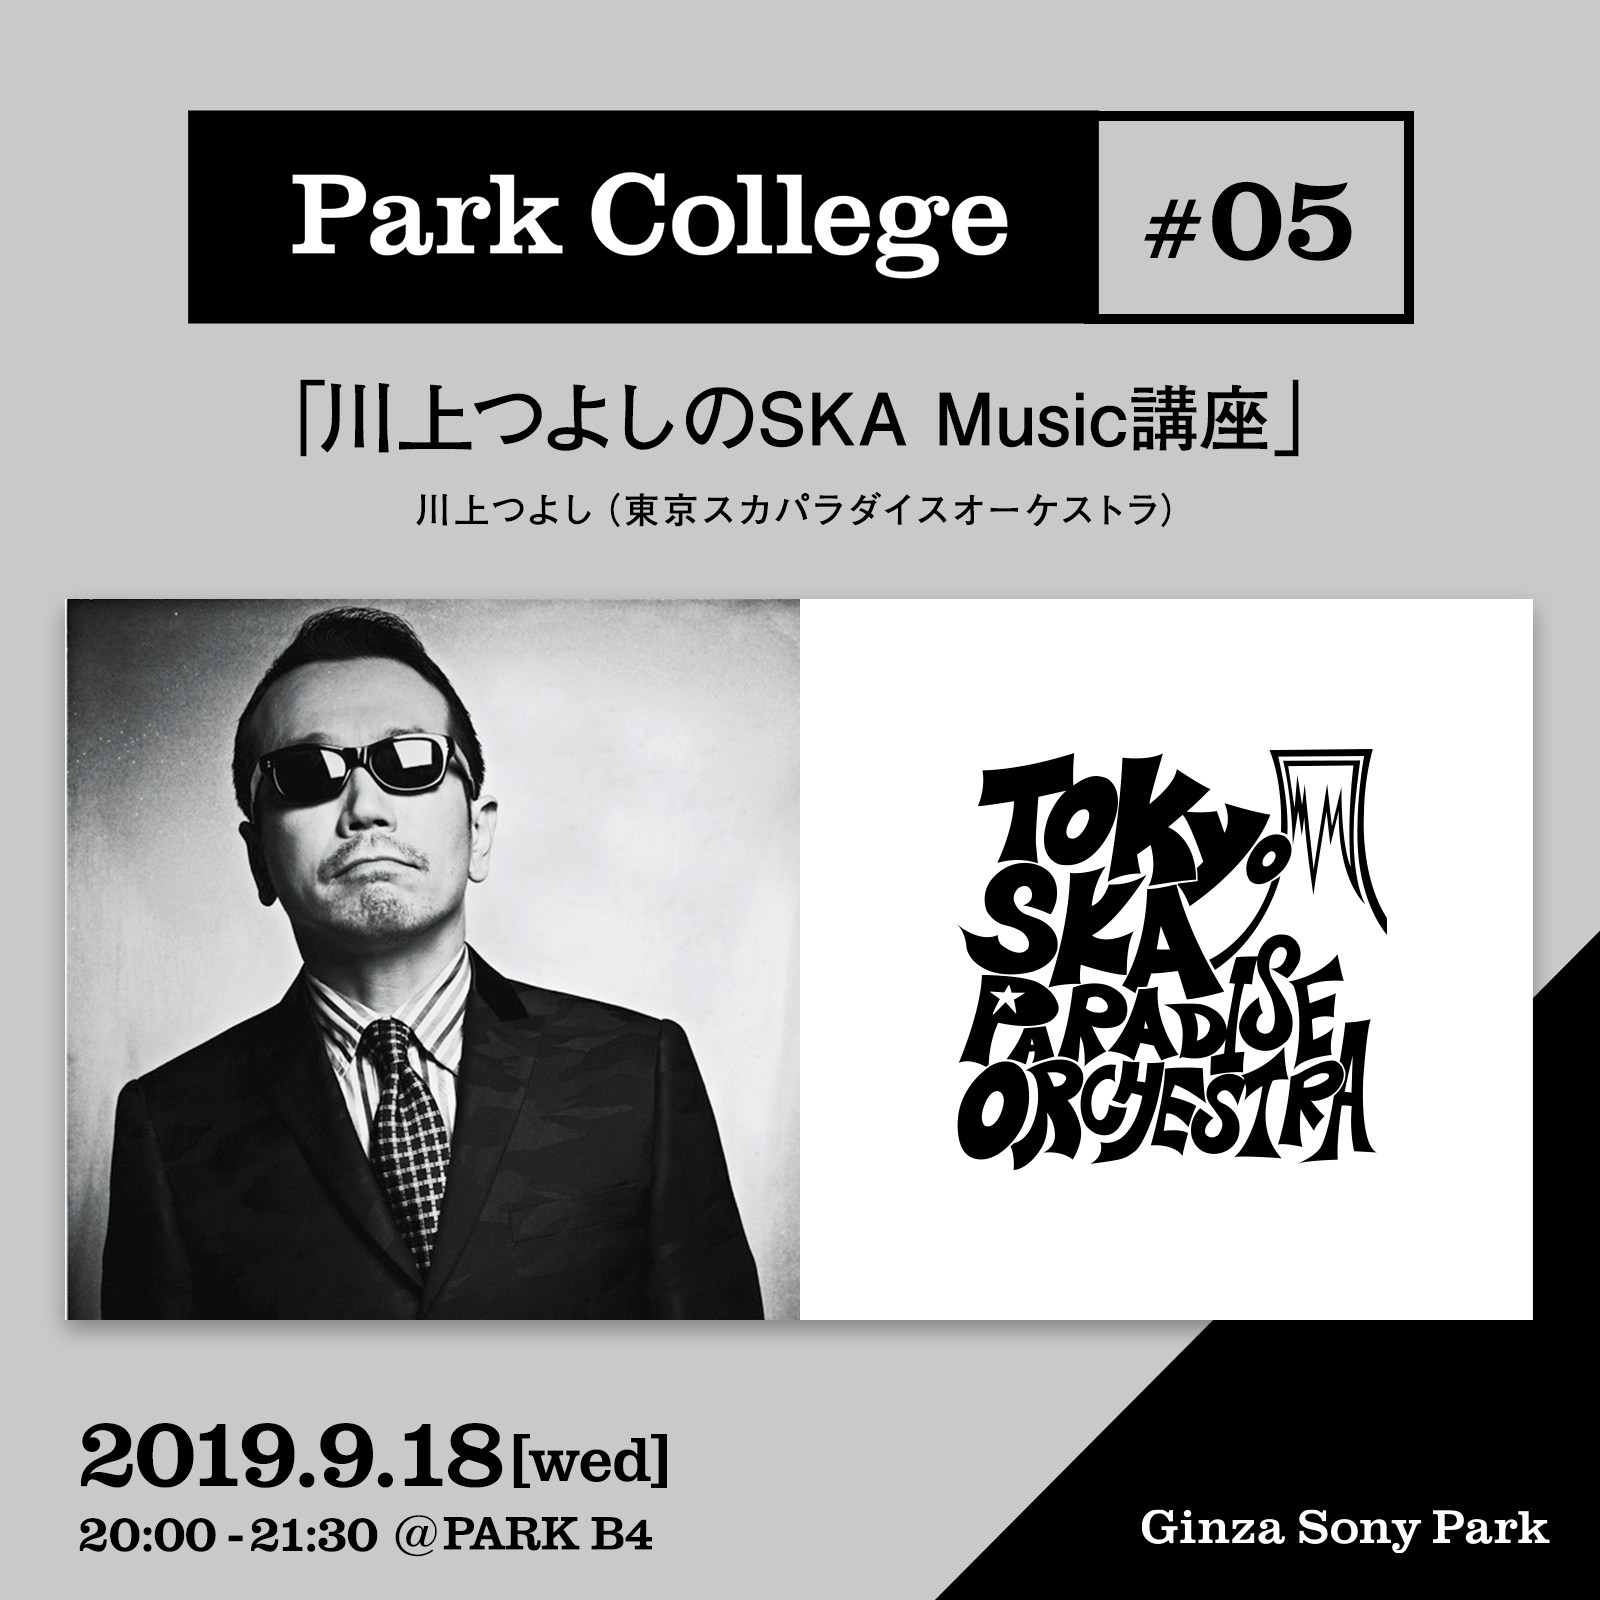 Park College #05 / 「川上つよしのSKA Music講座」 / 川上つよし（東京スカパラダイスオーケストラ）/ 2019.9.18[wed] 20:00 - 21:30 @PARK B4 / Ginza Sony Park